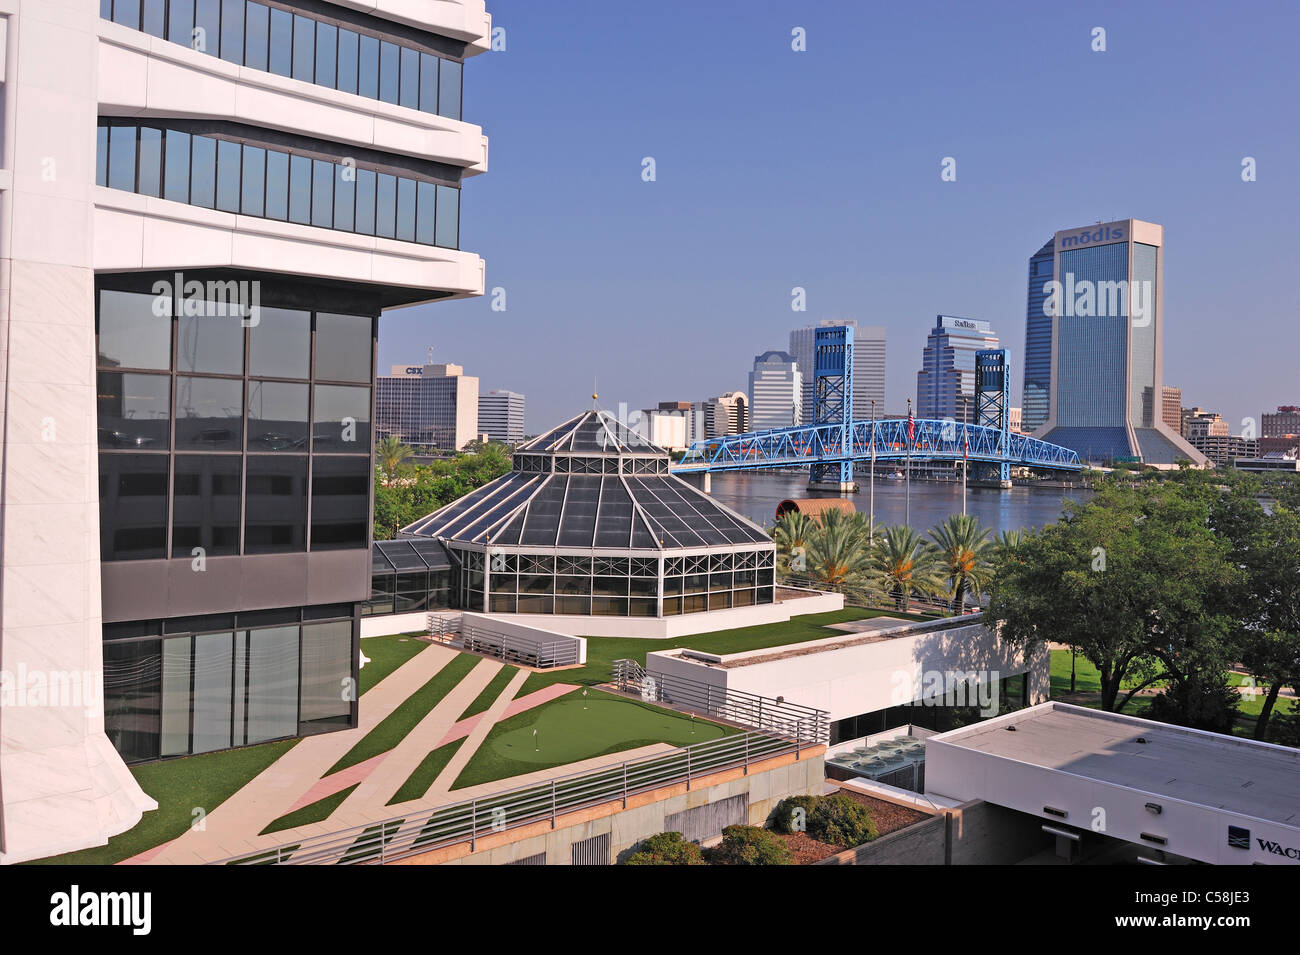 St. Johns River, Blue bridge, Jacksonville, Florida, USA, United States, America, buildings Stock Photo